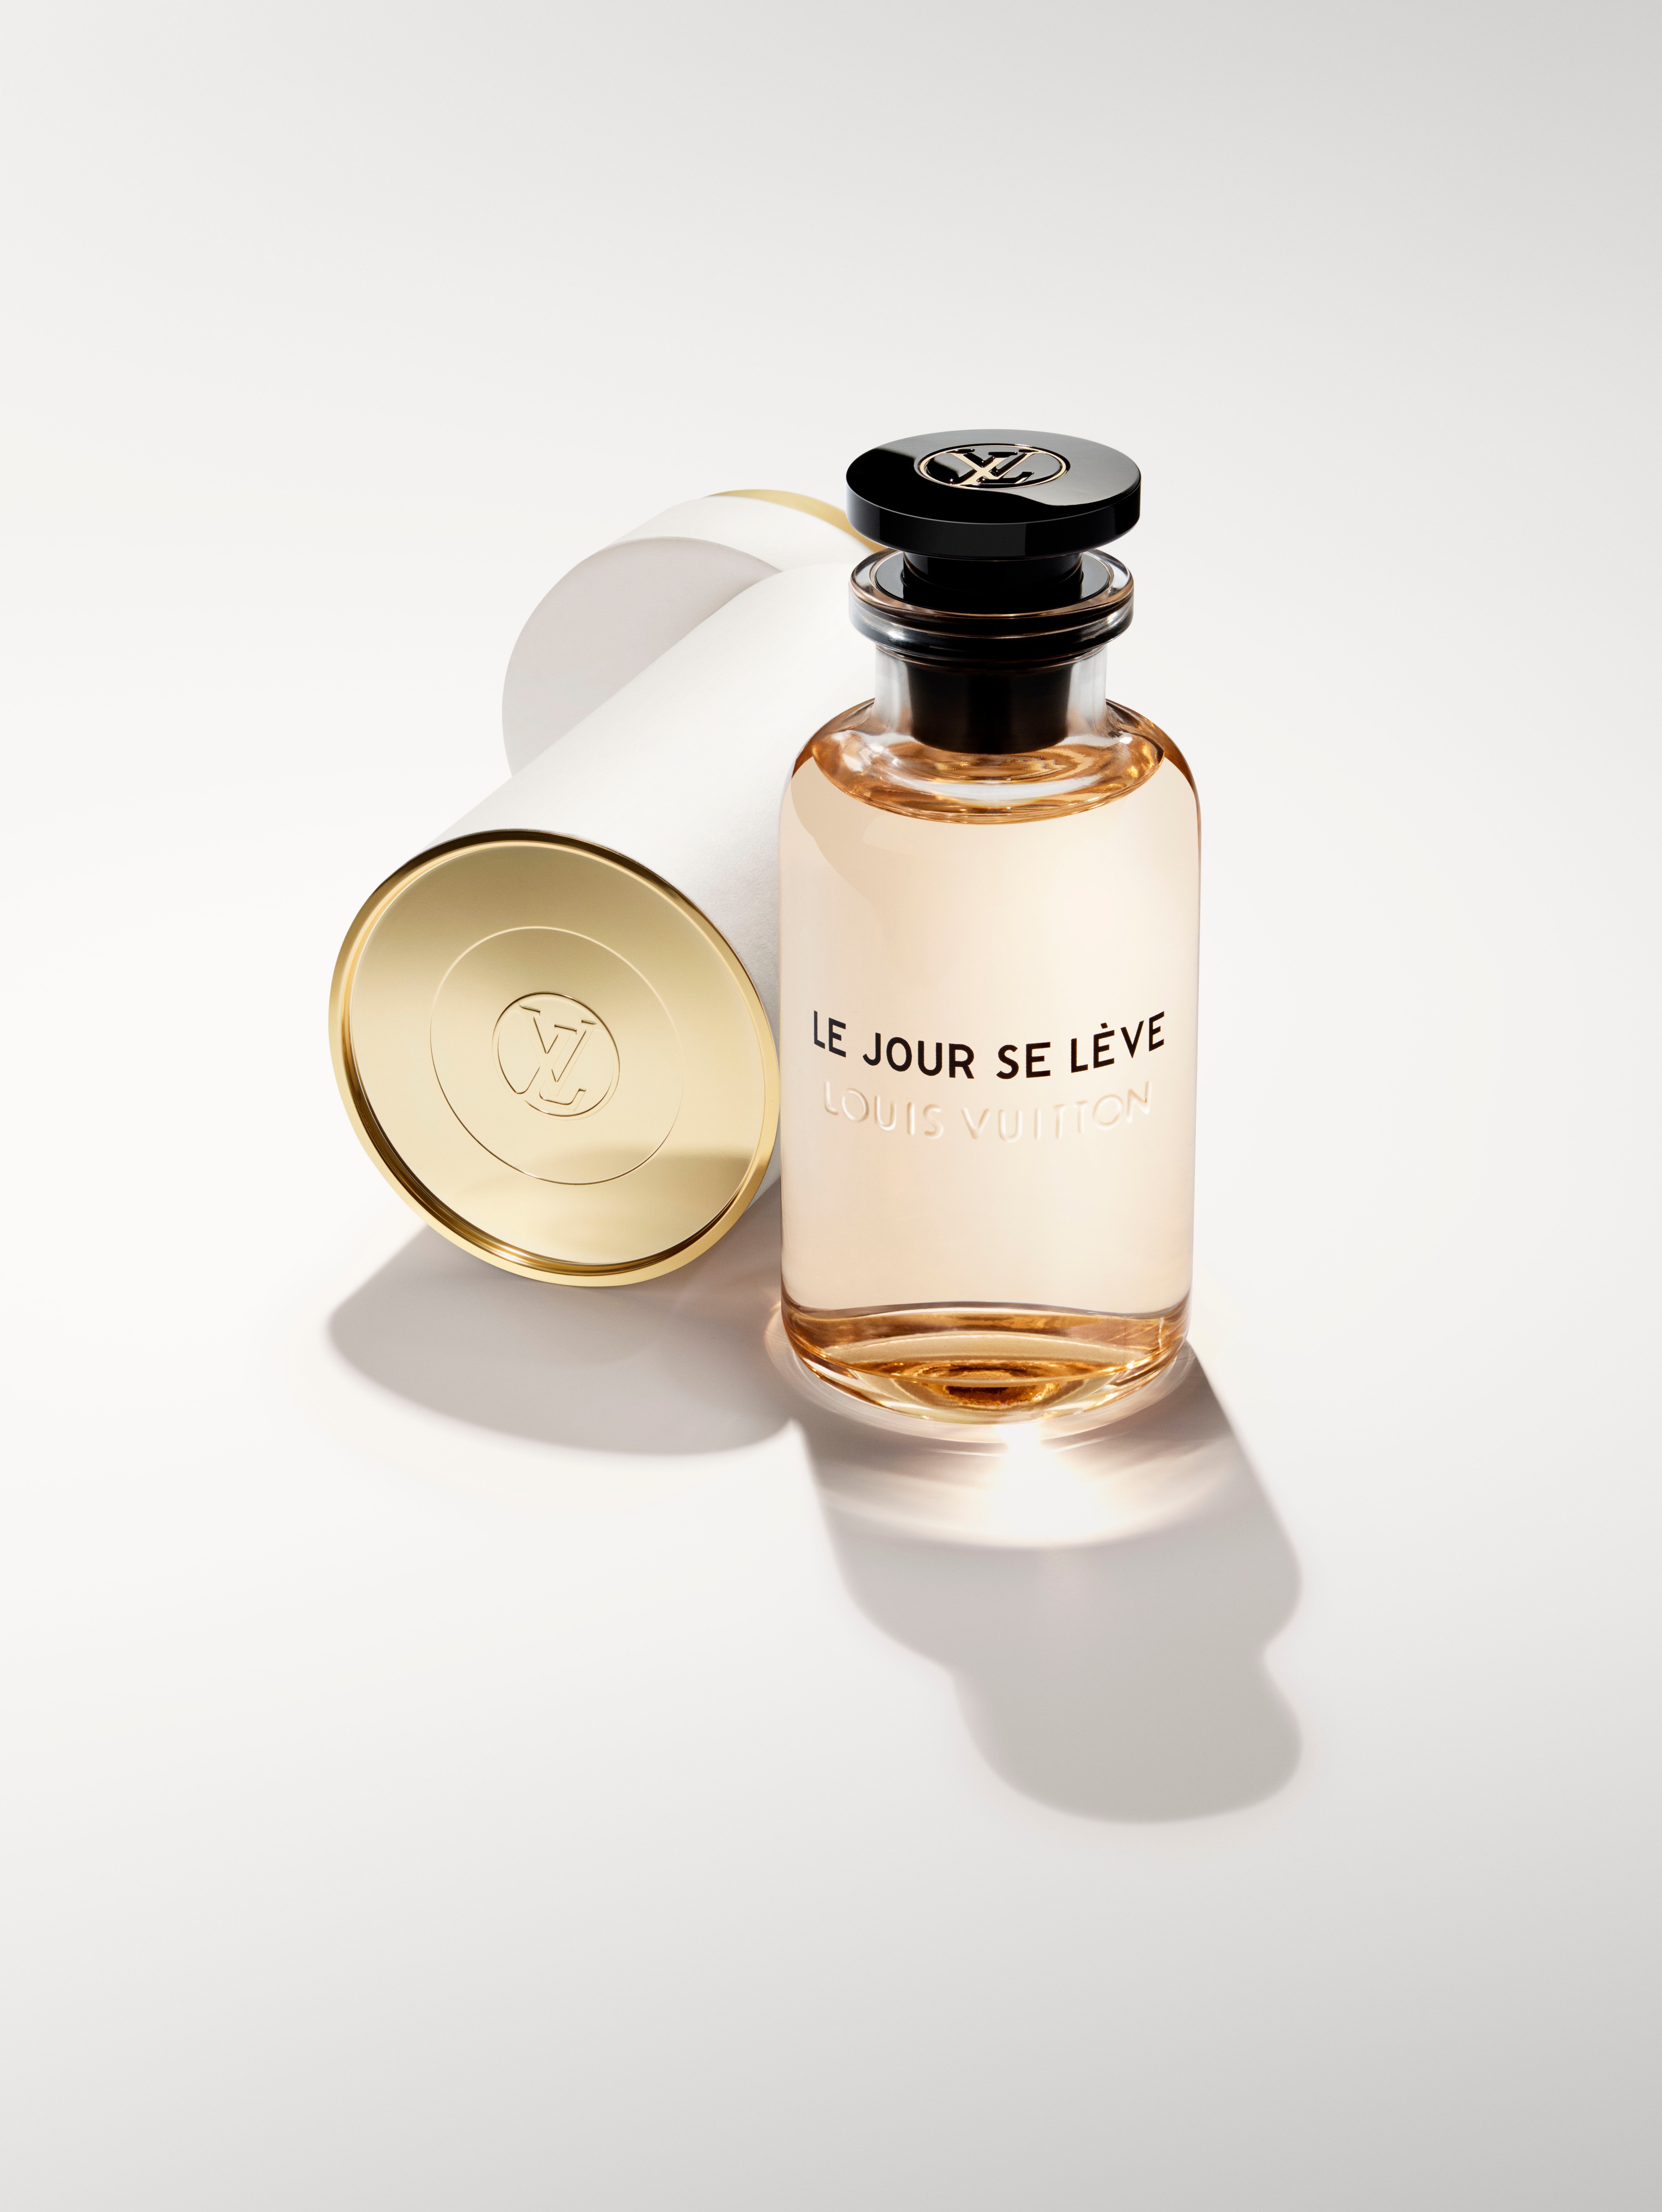 Louis Vuitton Perfumes First Impressions, Les Parfums Louis Vuitton